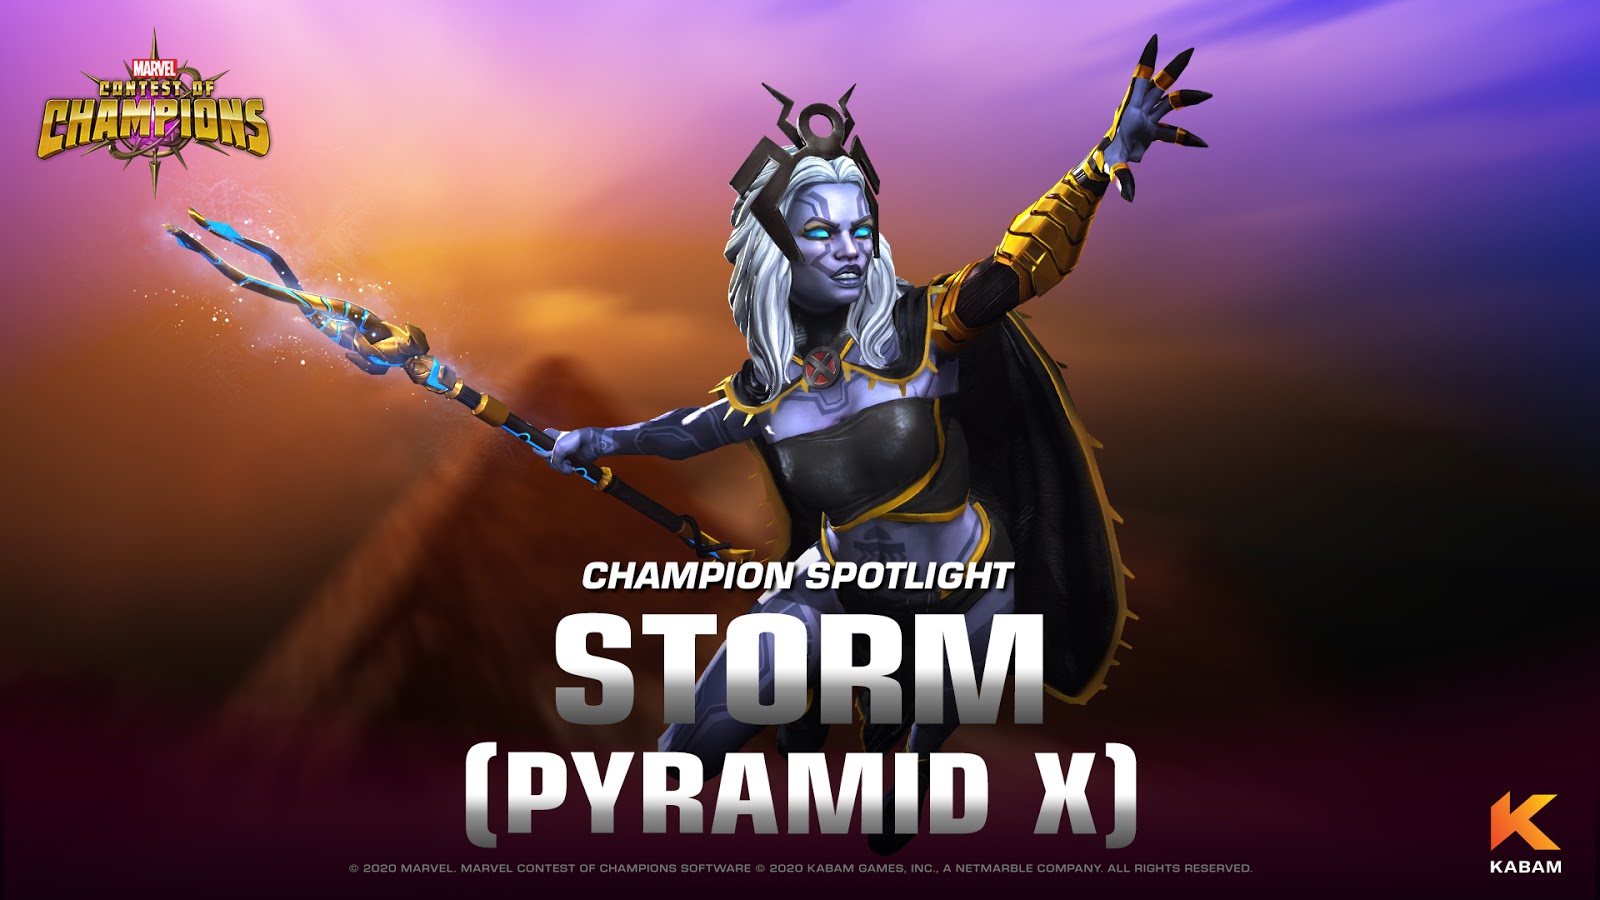 How to Easily defeat Storm Pyramid X - Image Credit KABAM